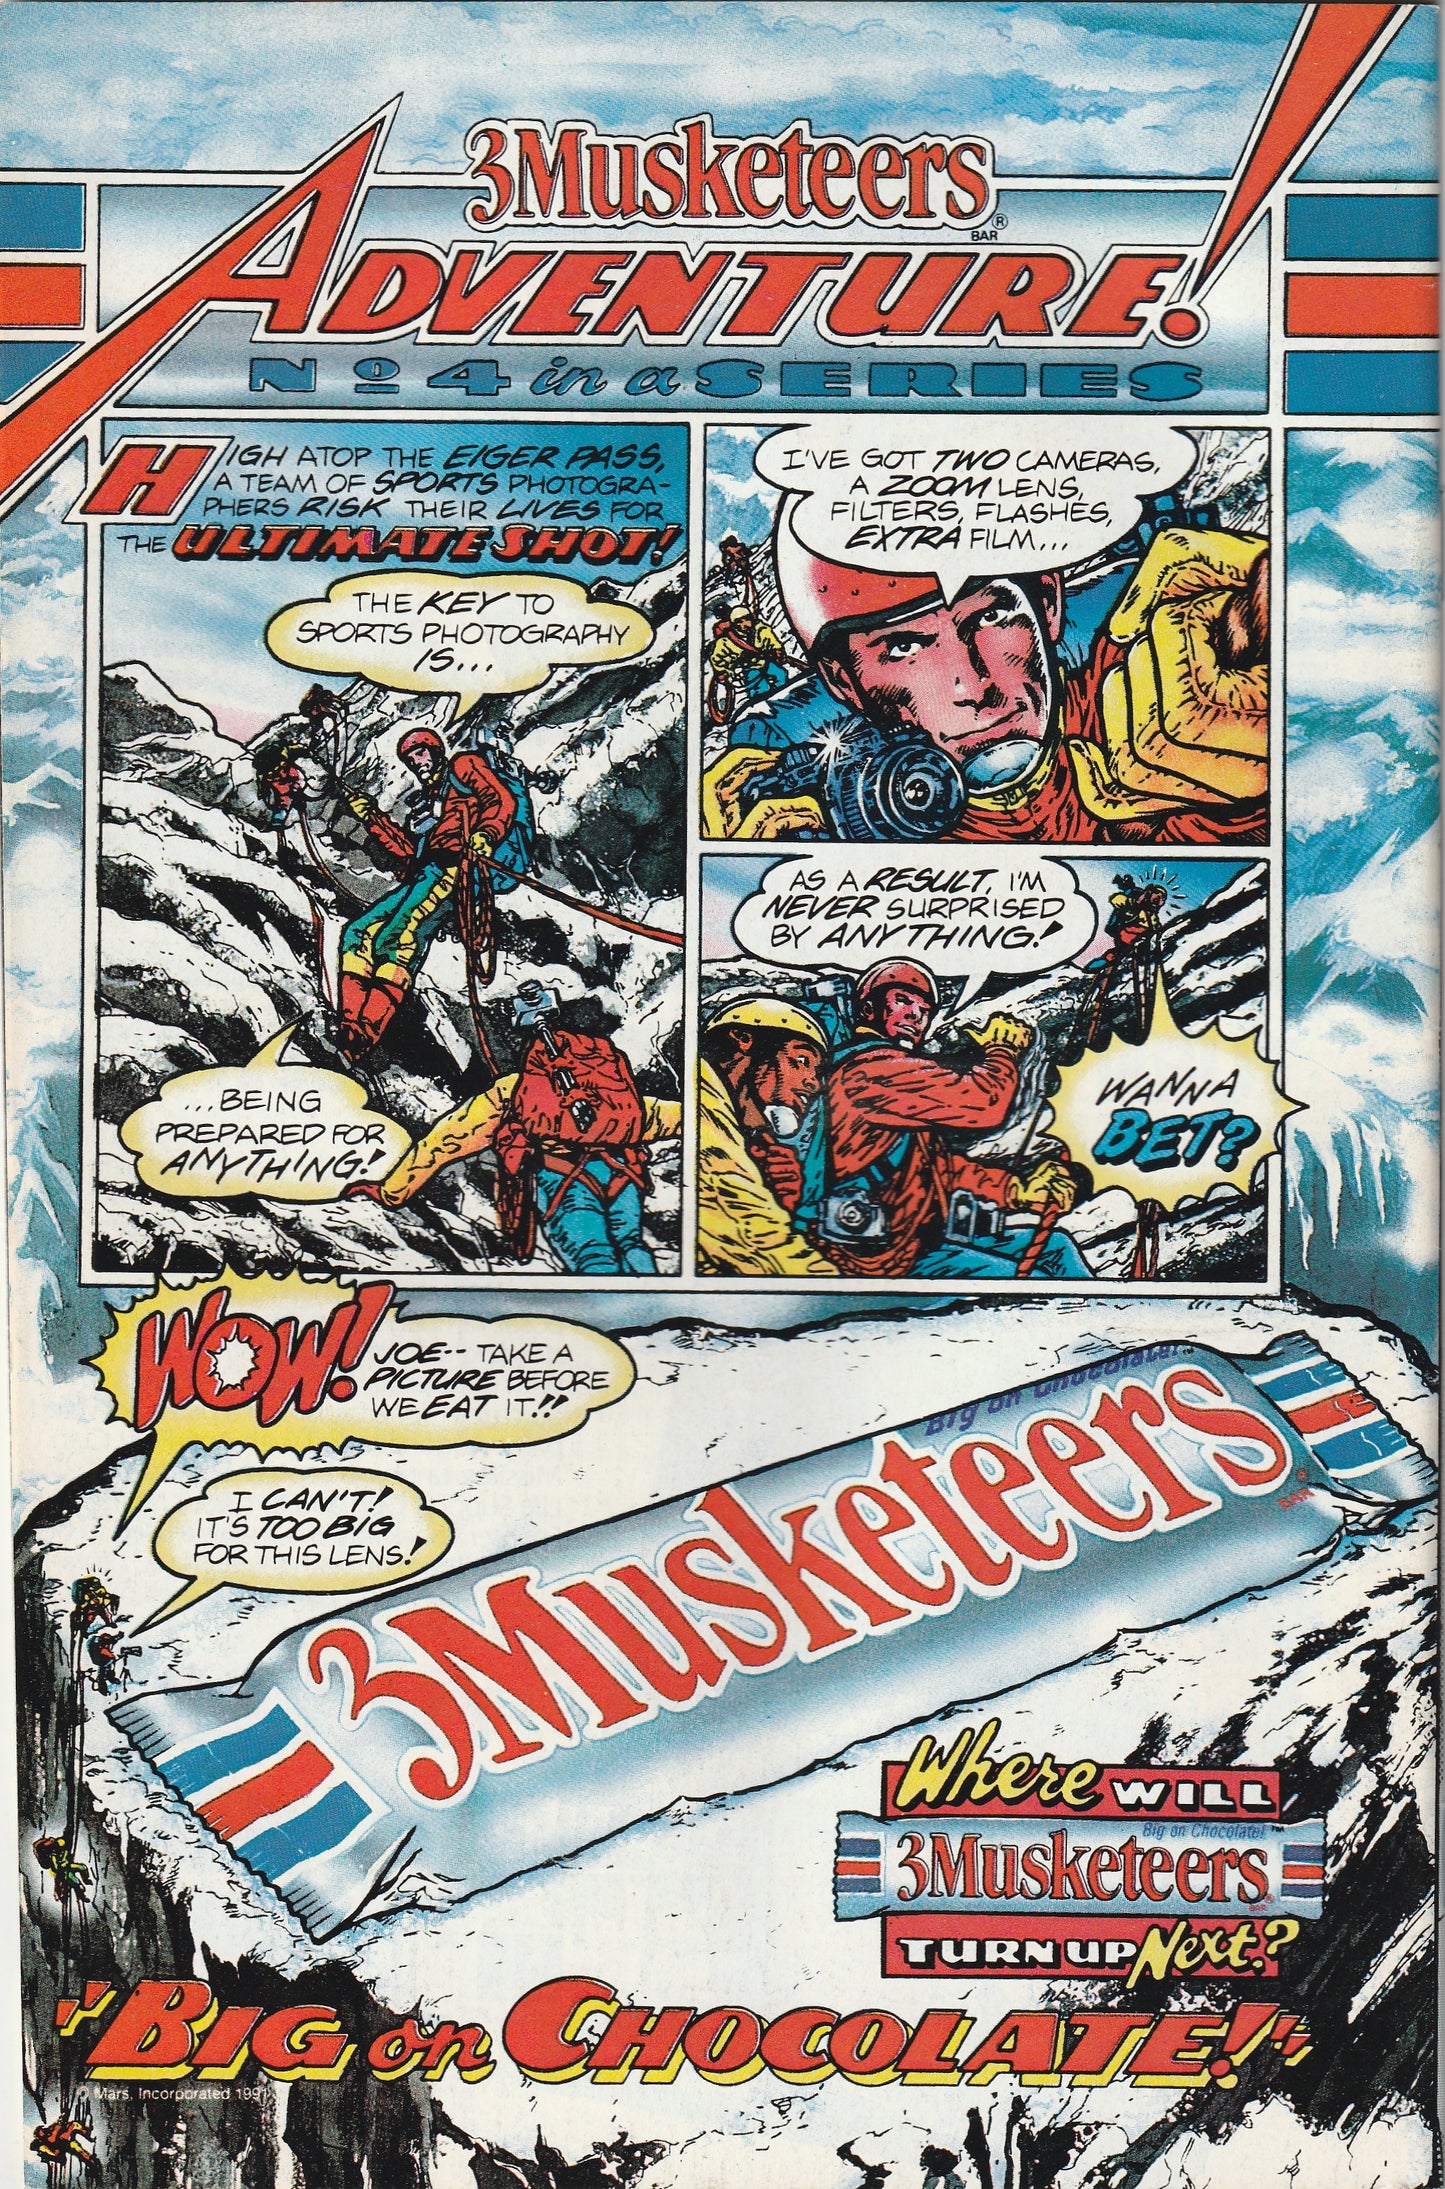 Action Comics #665 (1991)